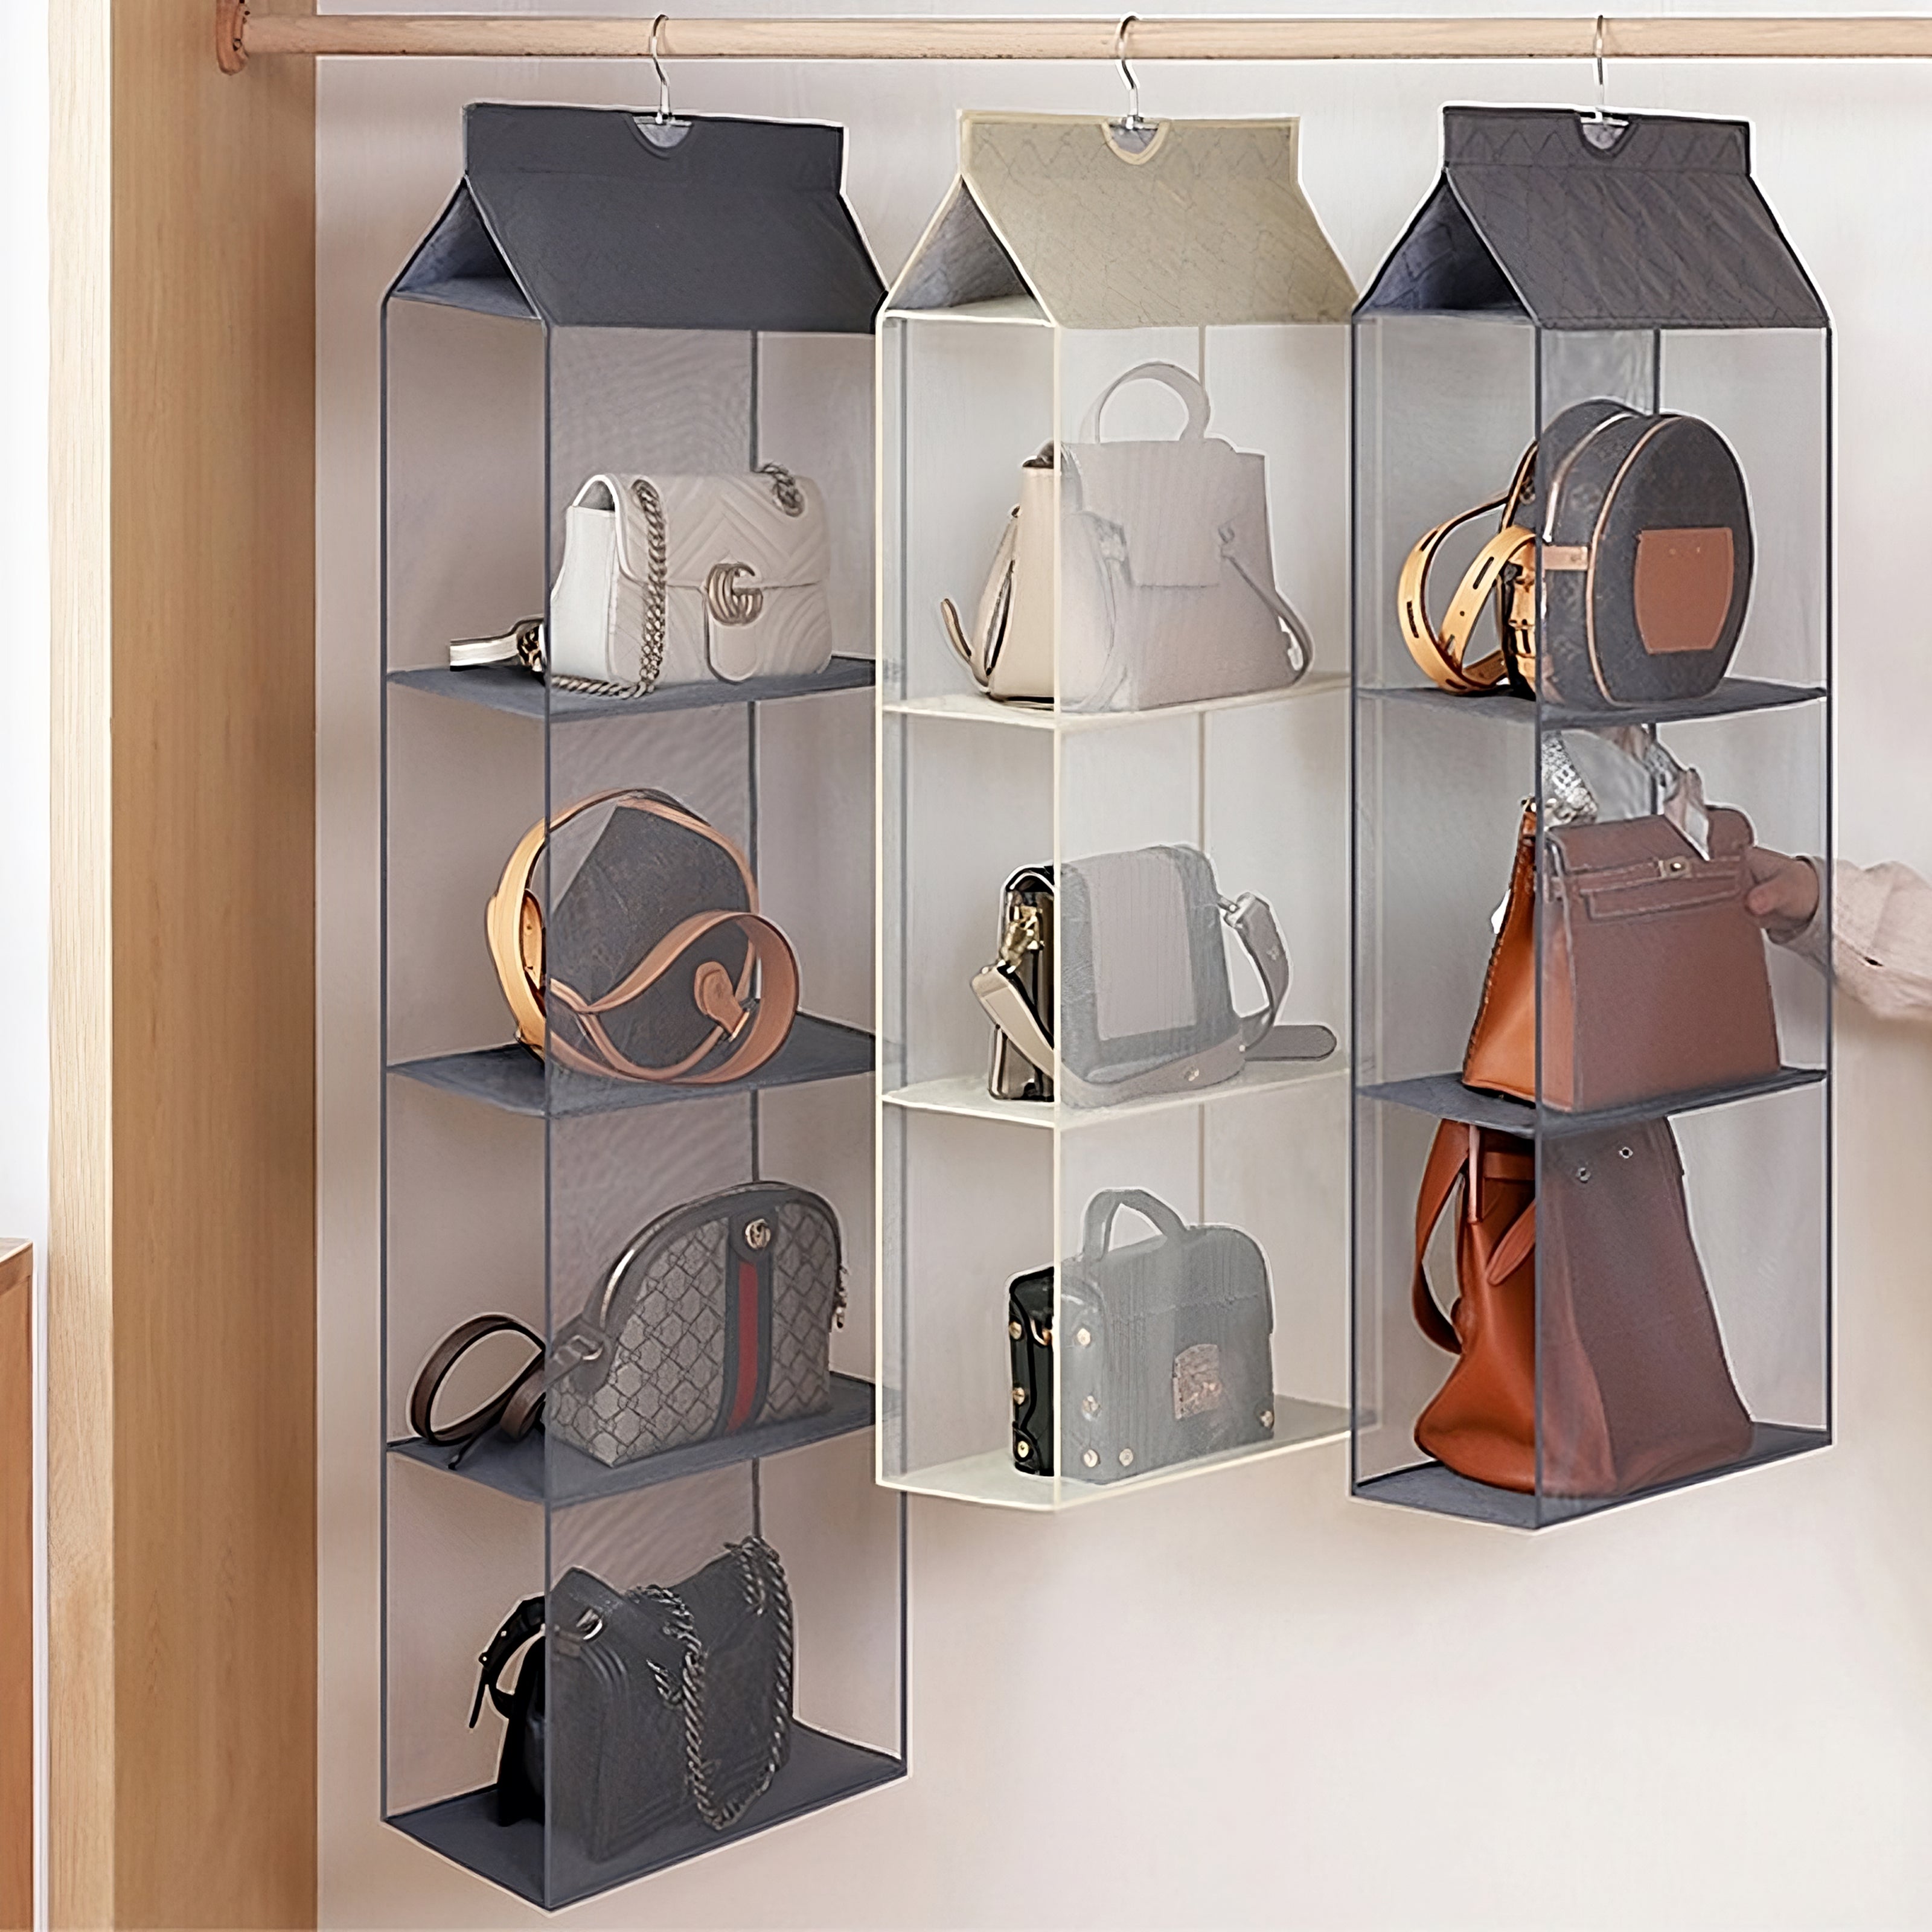 Purse Hanger for Closet Handbag Tote Bag Organizer Storage Hooks for Hanging Bags Purses Protecting Bag Shape Organizing Space, Size: Large